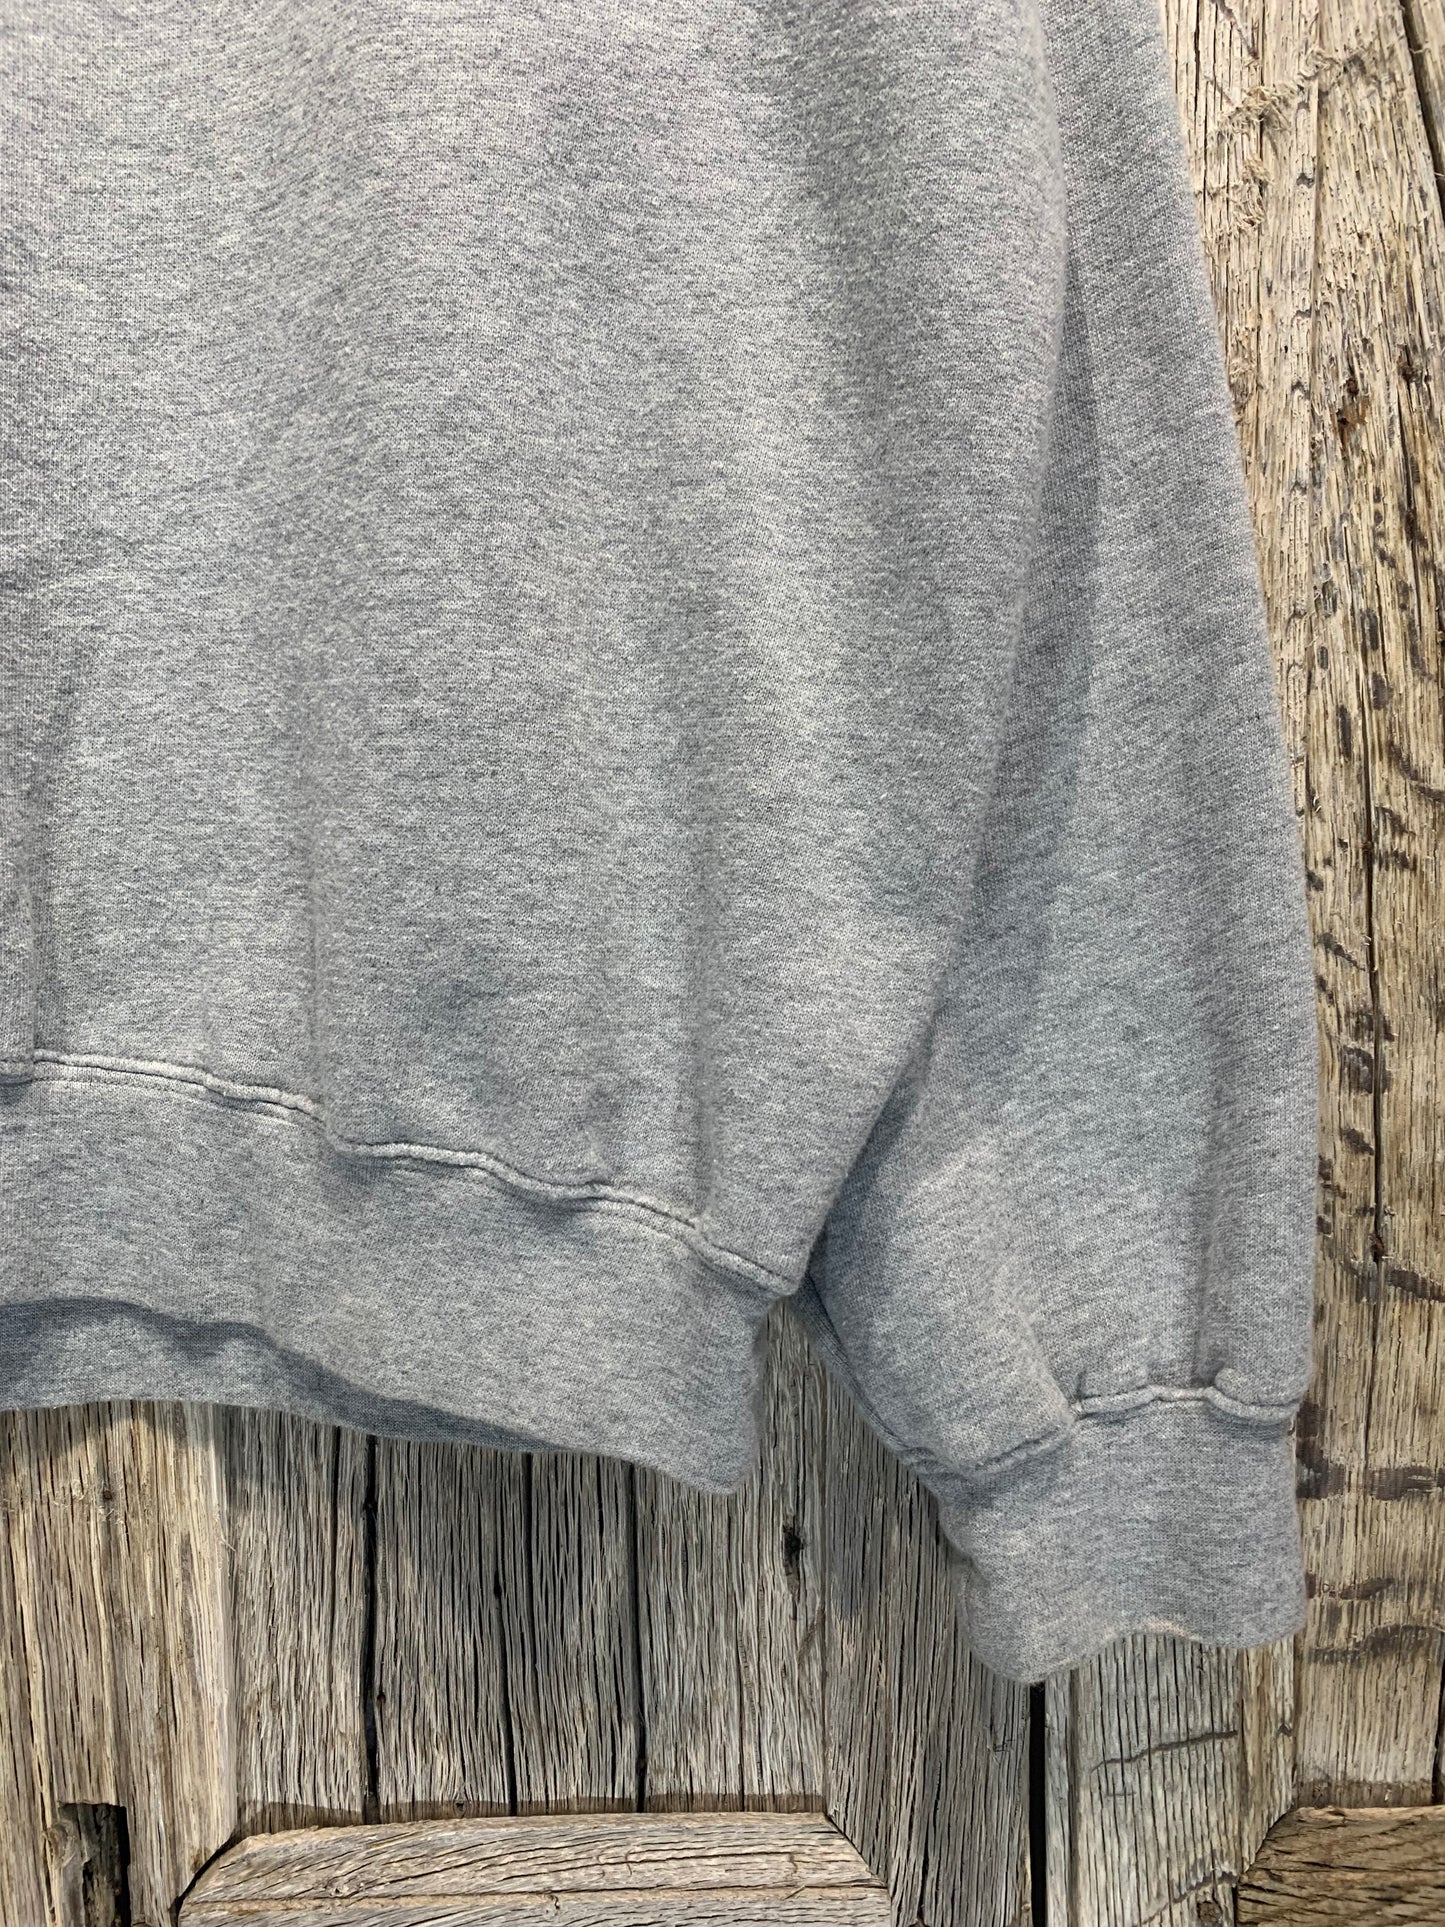 Timberland Grey Embroidered Sweatshirt